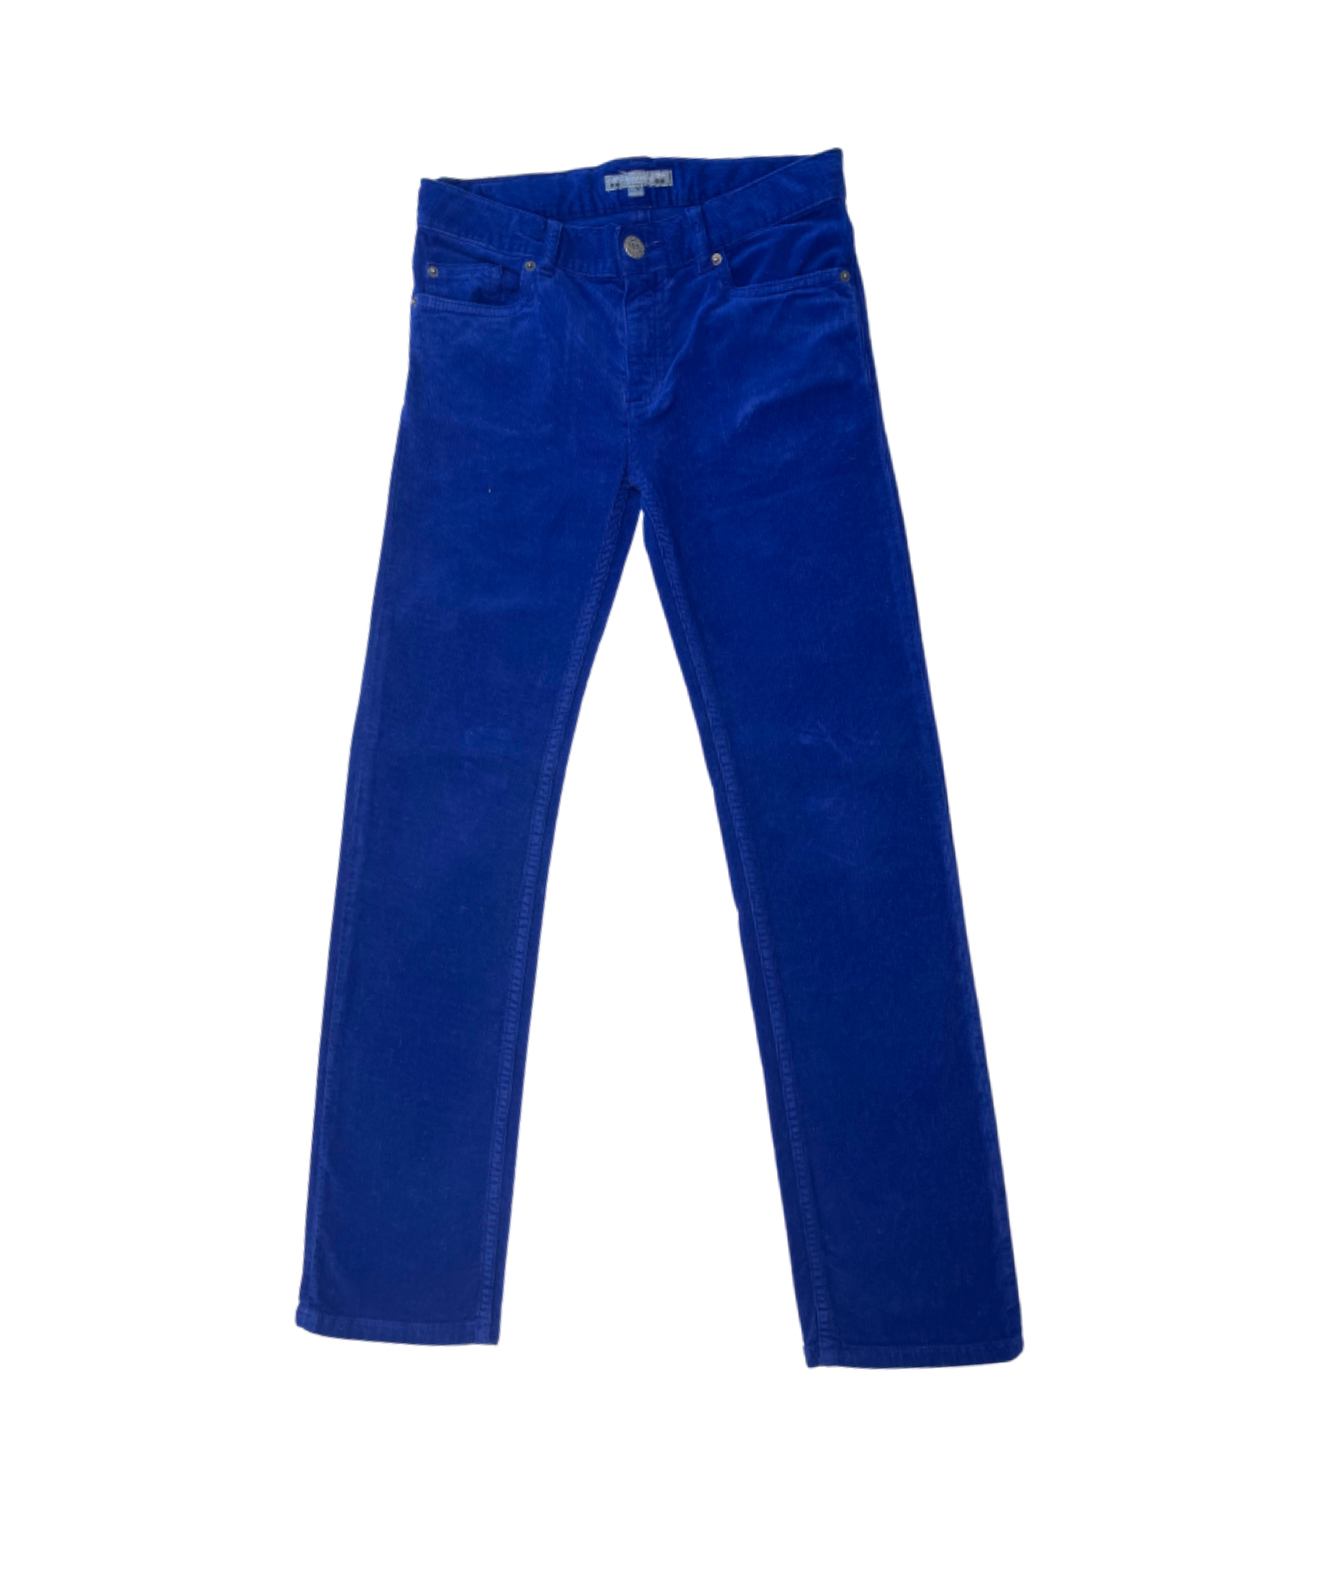 BONPOINT - Pantalon velours côtelé bleu roi - 10 ans